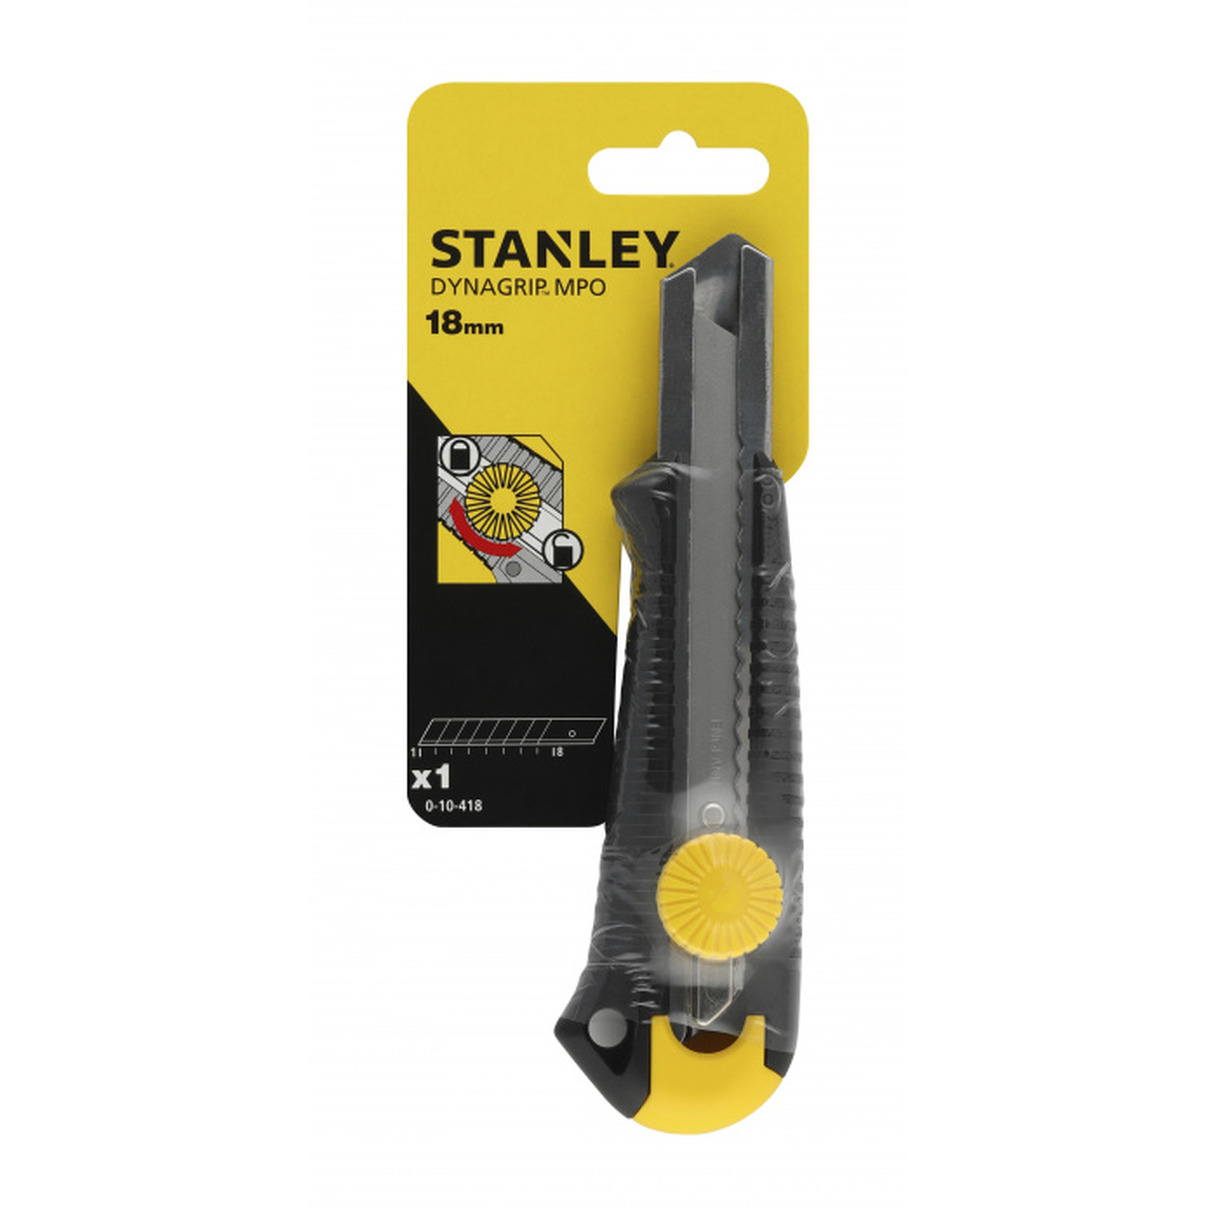 Нож Stanley Dynagrip Mpo 18мм вращ.прижим 0-10-418 stanley dynagrip 6 желтый черный